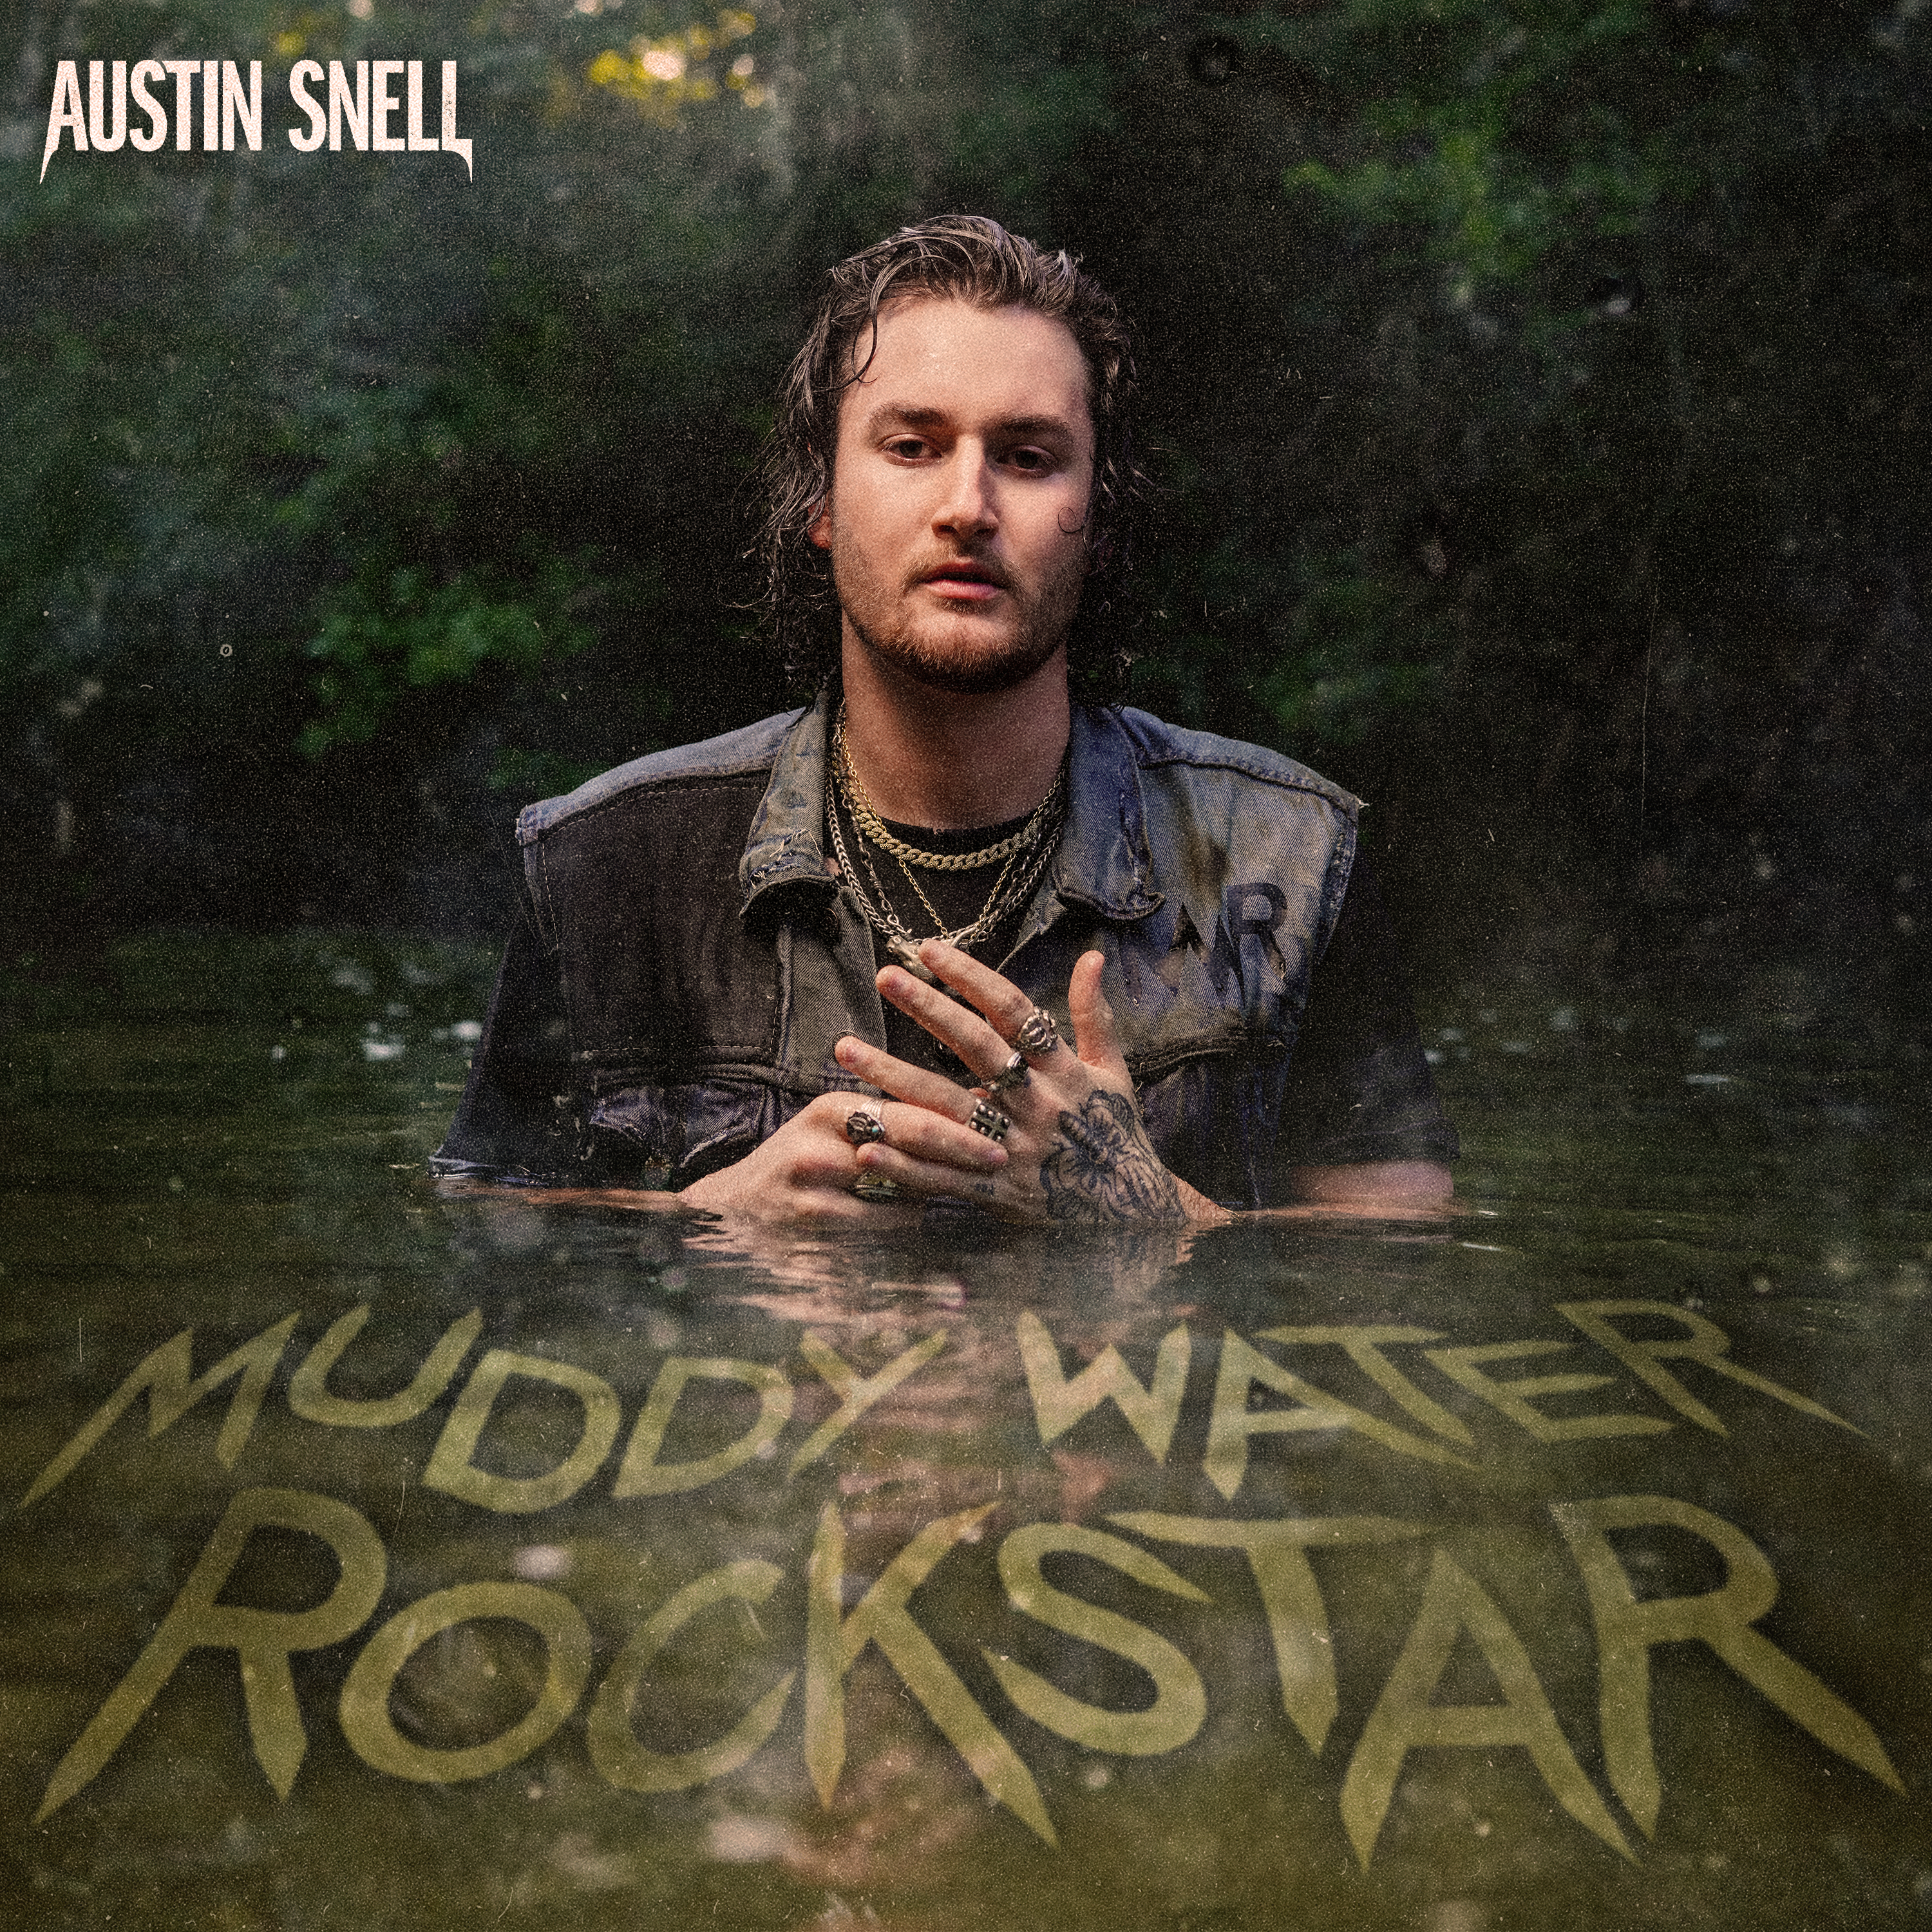 Austin Snell — Muddy Water Rockstar cover artwork